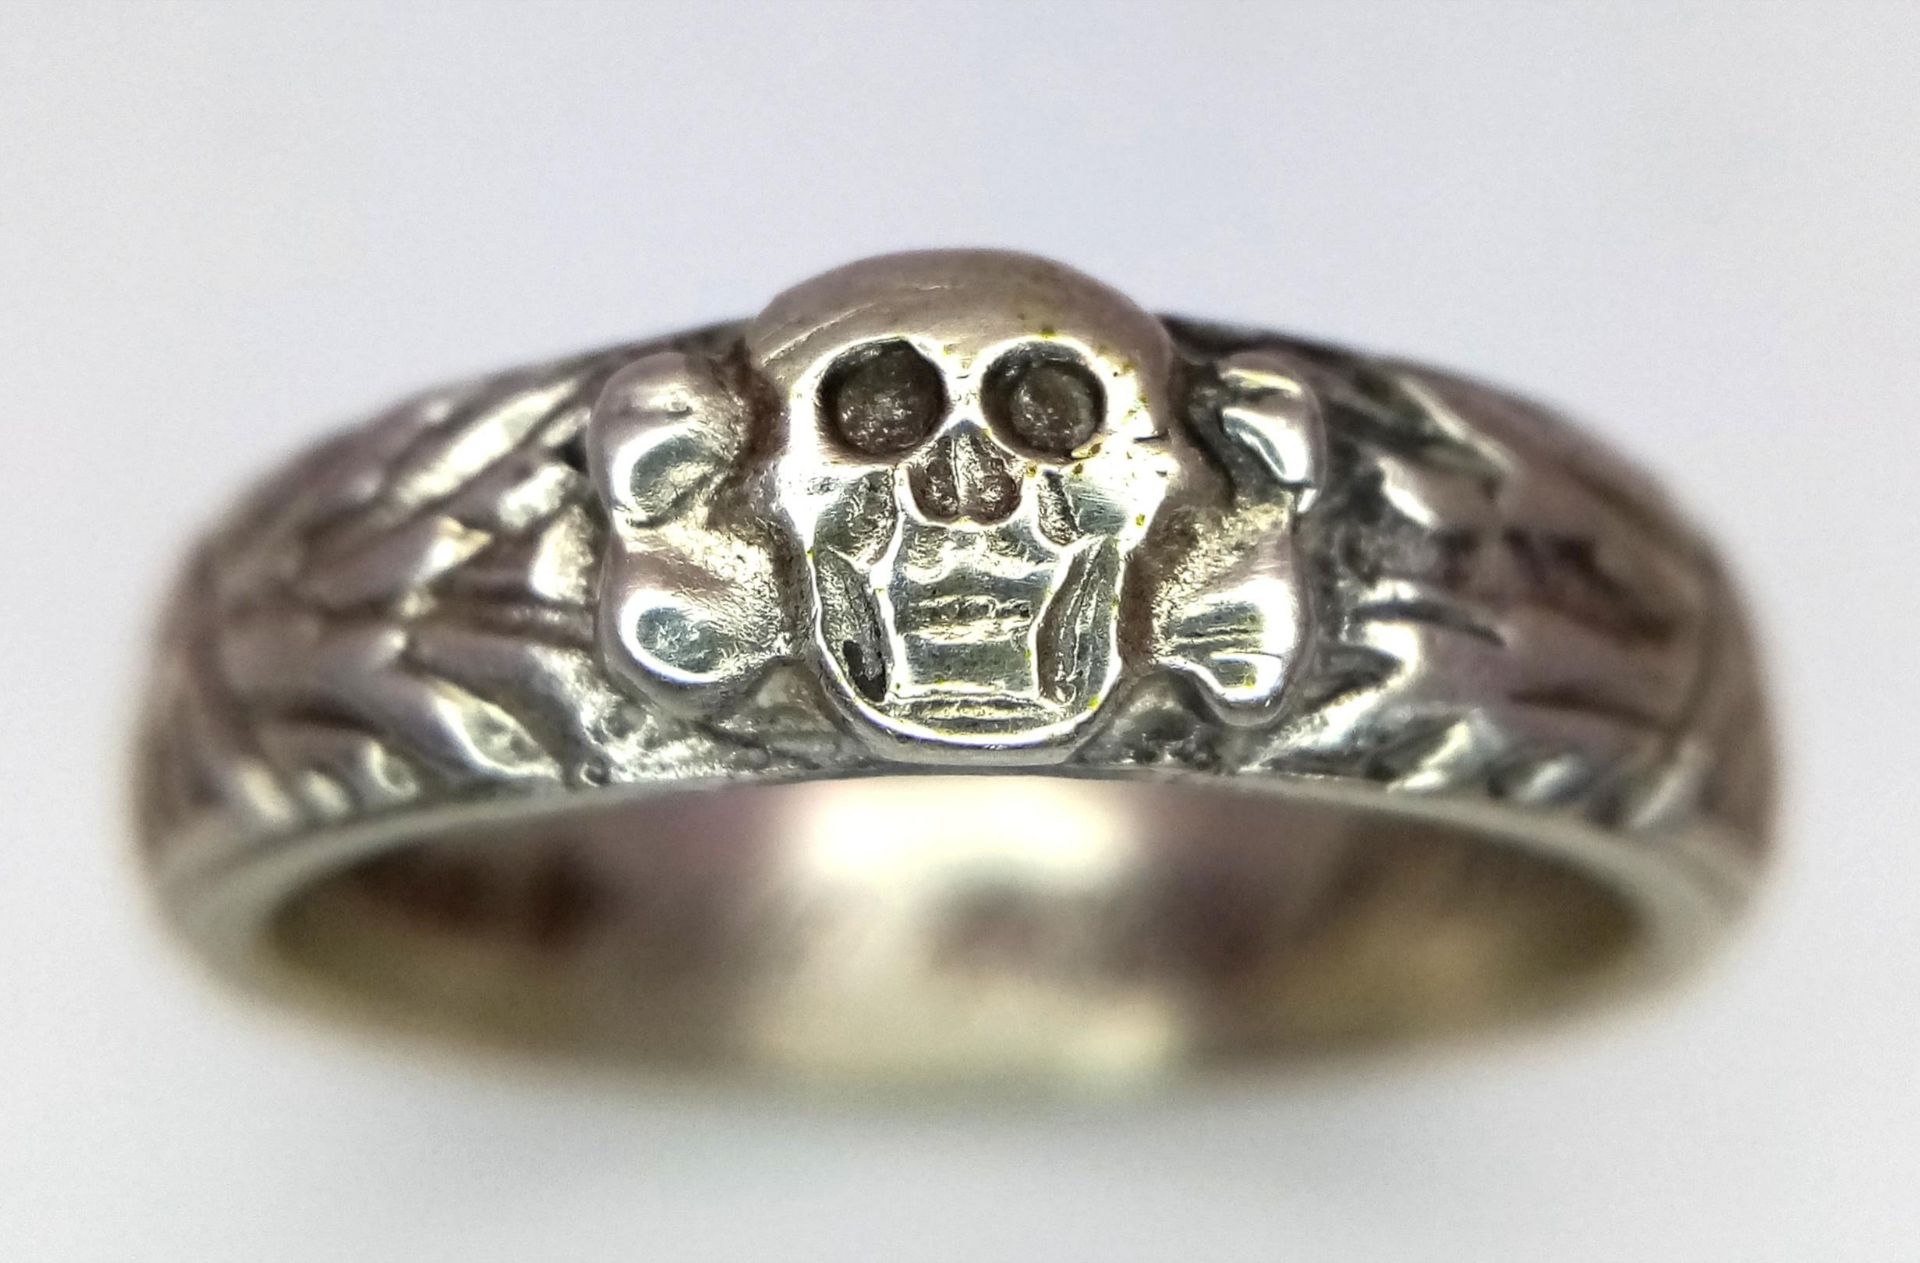 Re-enactors Silver SS Honour Ring. UK Size: V.5 US Size: V. Complete with Himmler Signature inside.